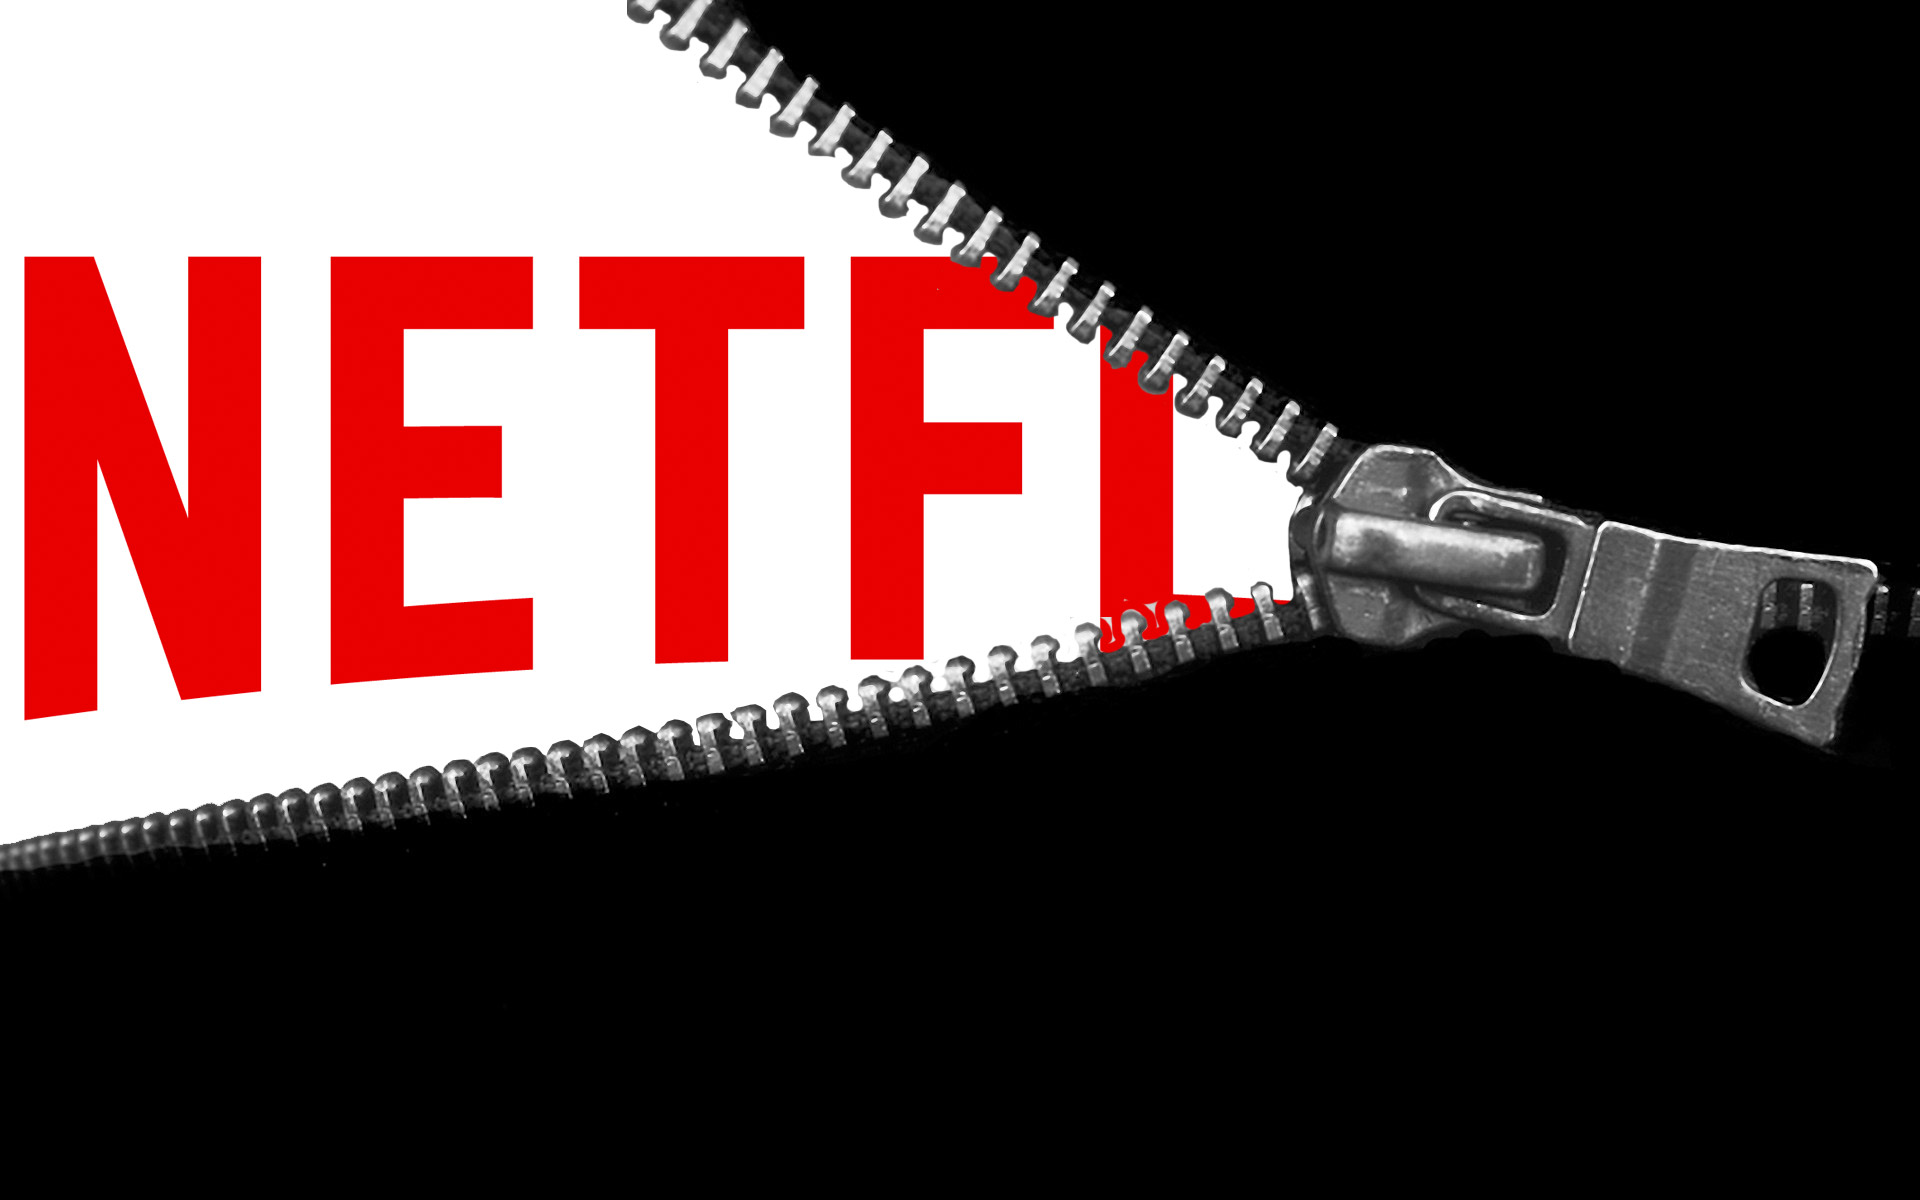  Netflix confirma nueva serie basada en actual investigación de corrupción brasileña